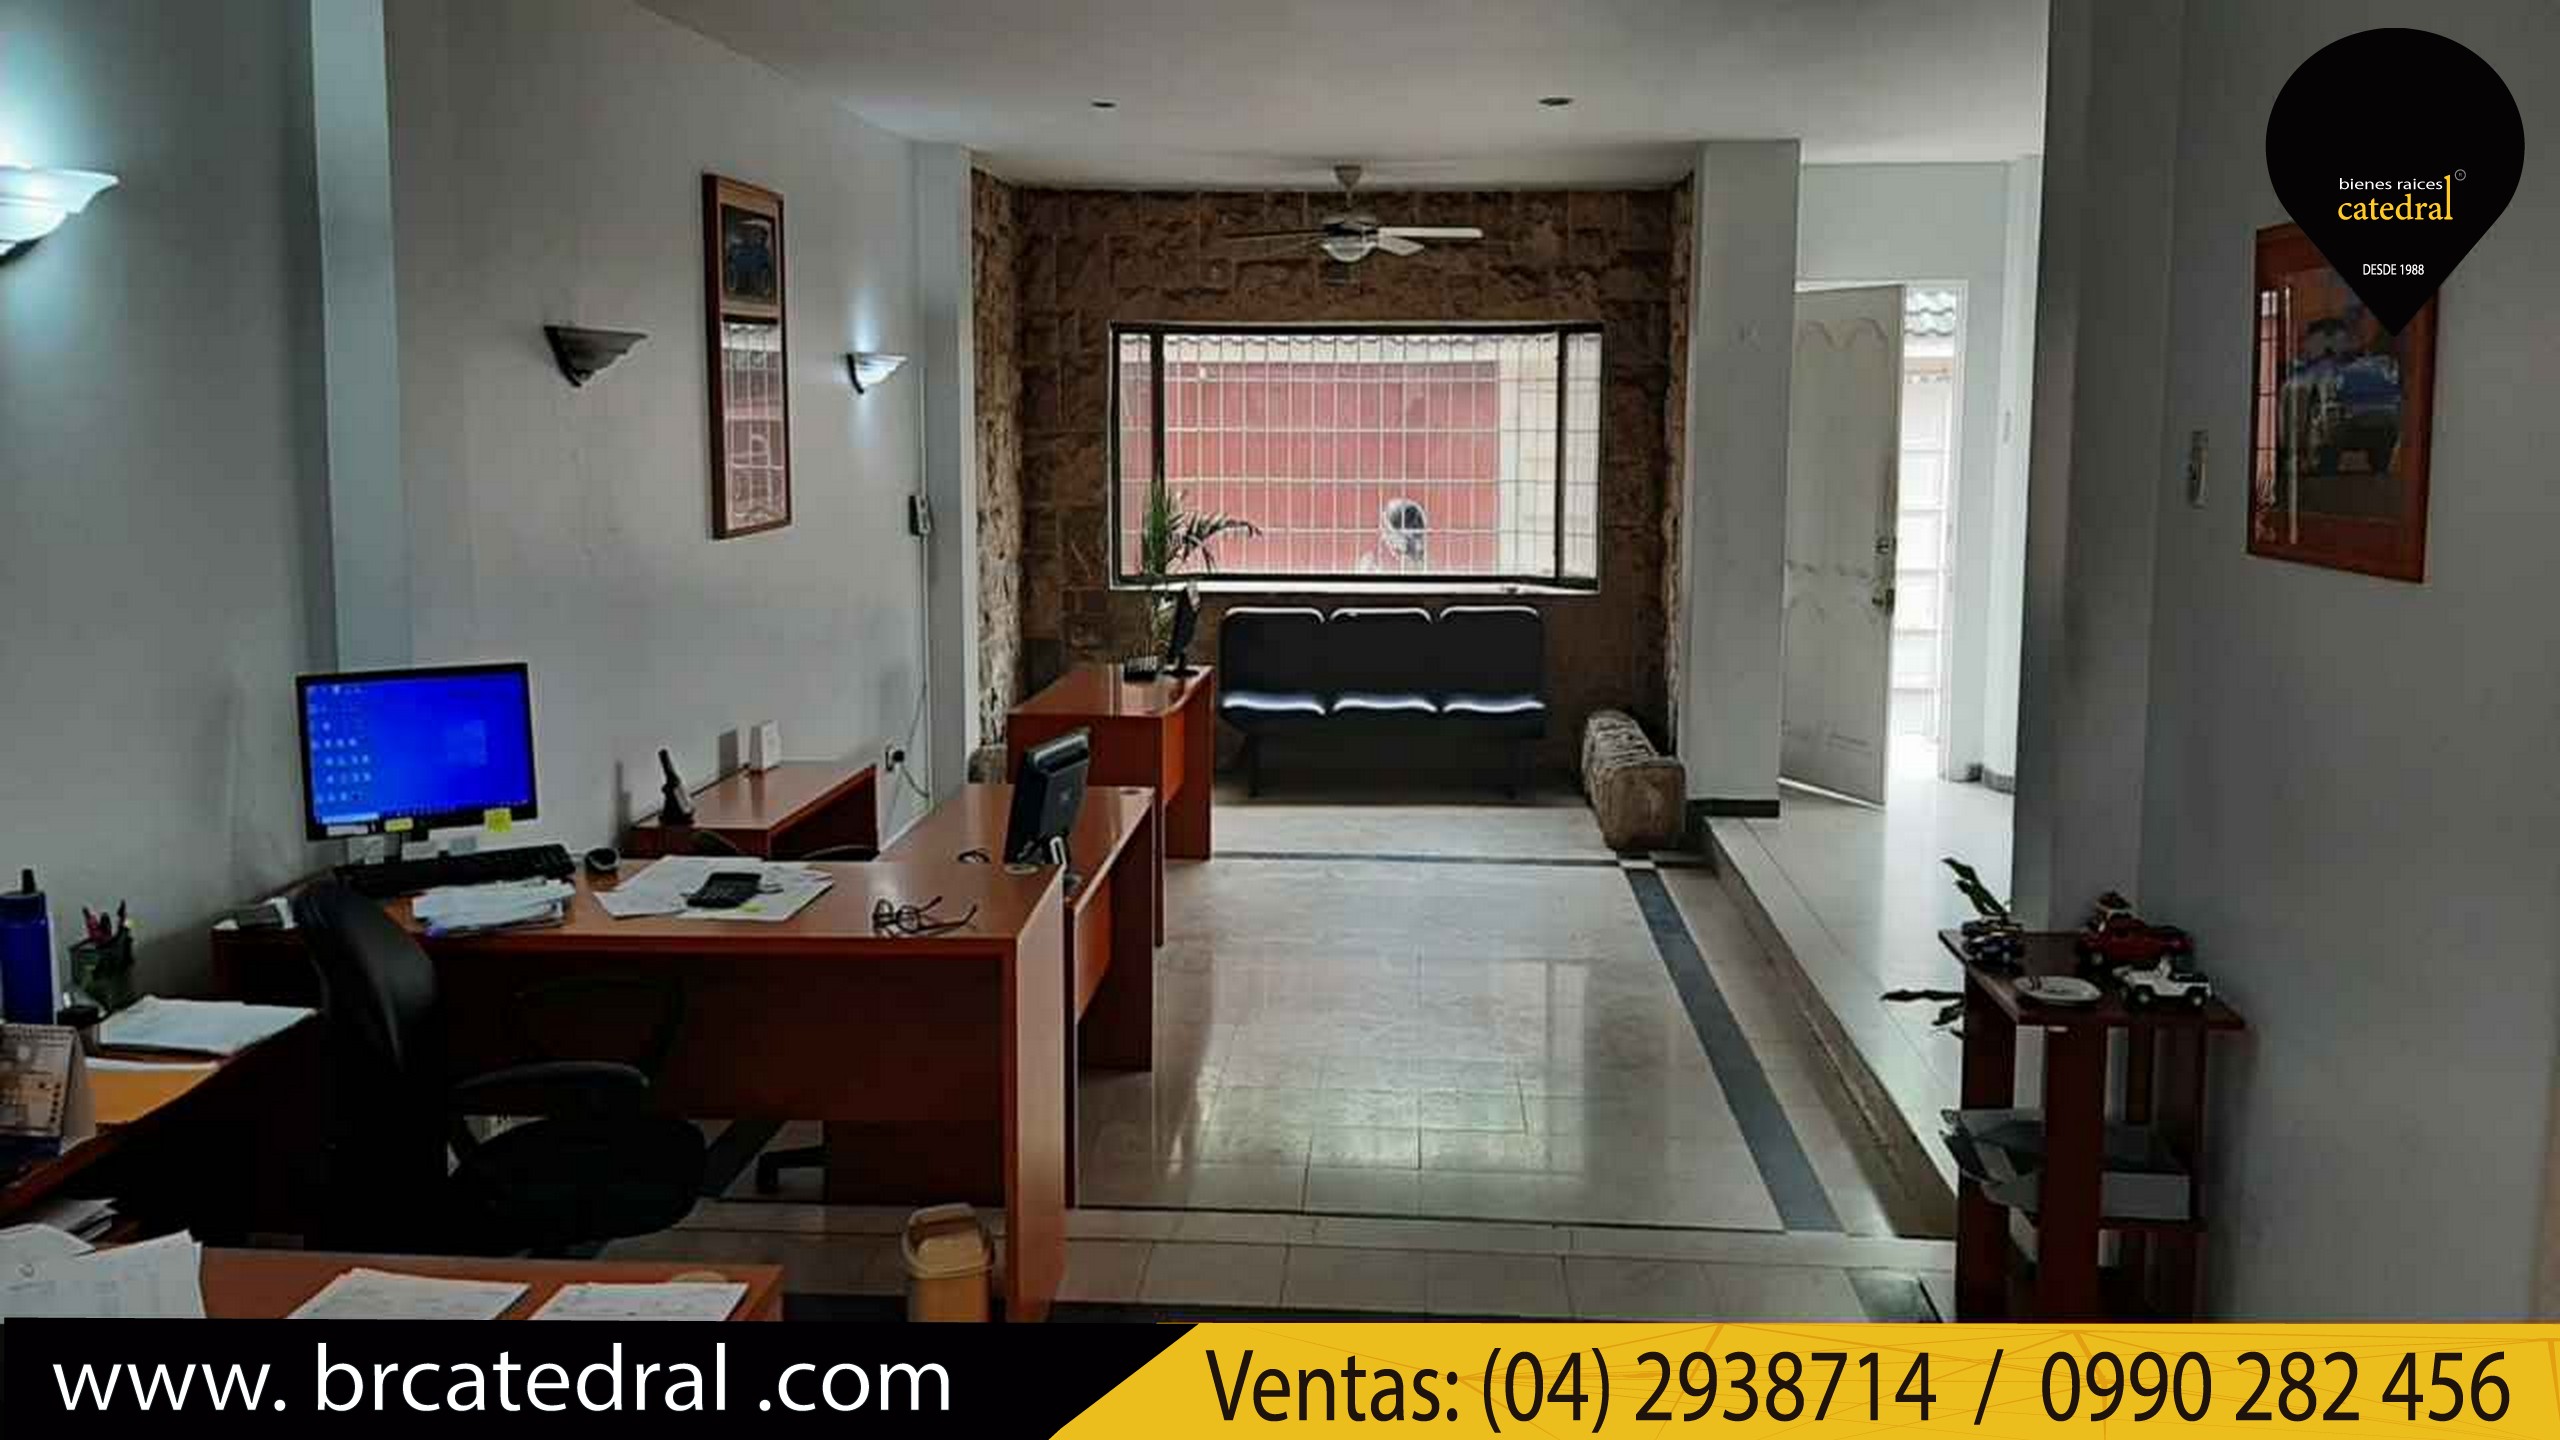 Villa Casa de Venta en Guayaquil Ecuador sector Urdenor - Av Juan Tanca Marengo